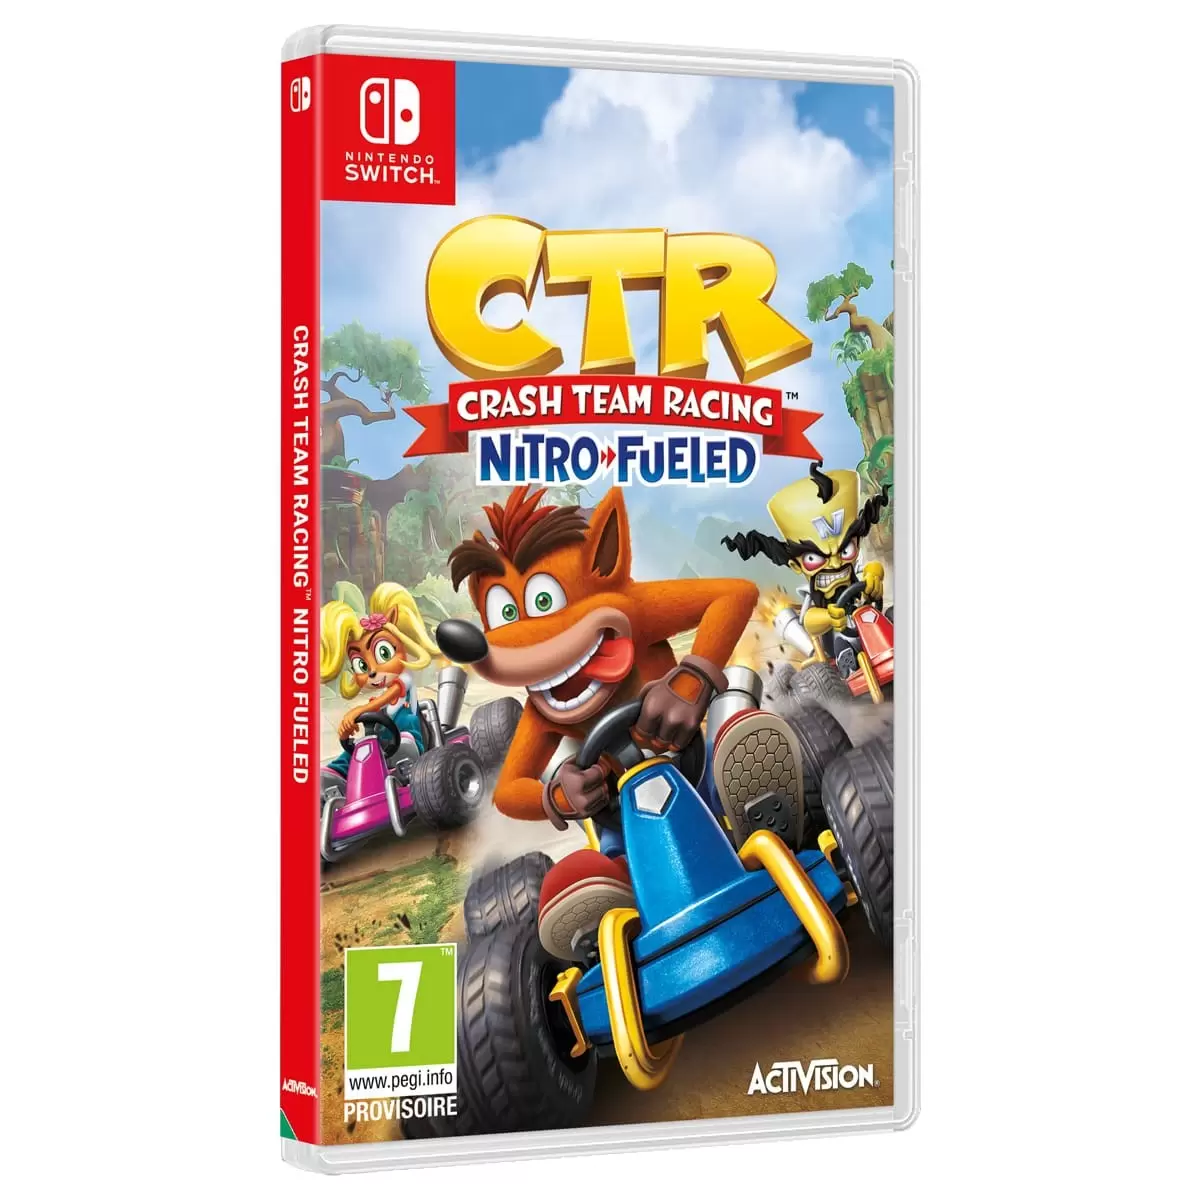 Nintendo Switch Games - CTR Crash Team Racing - Nitro Fueled